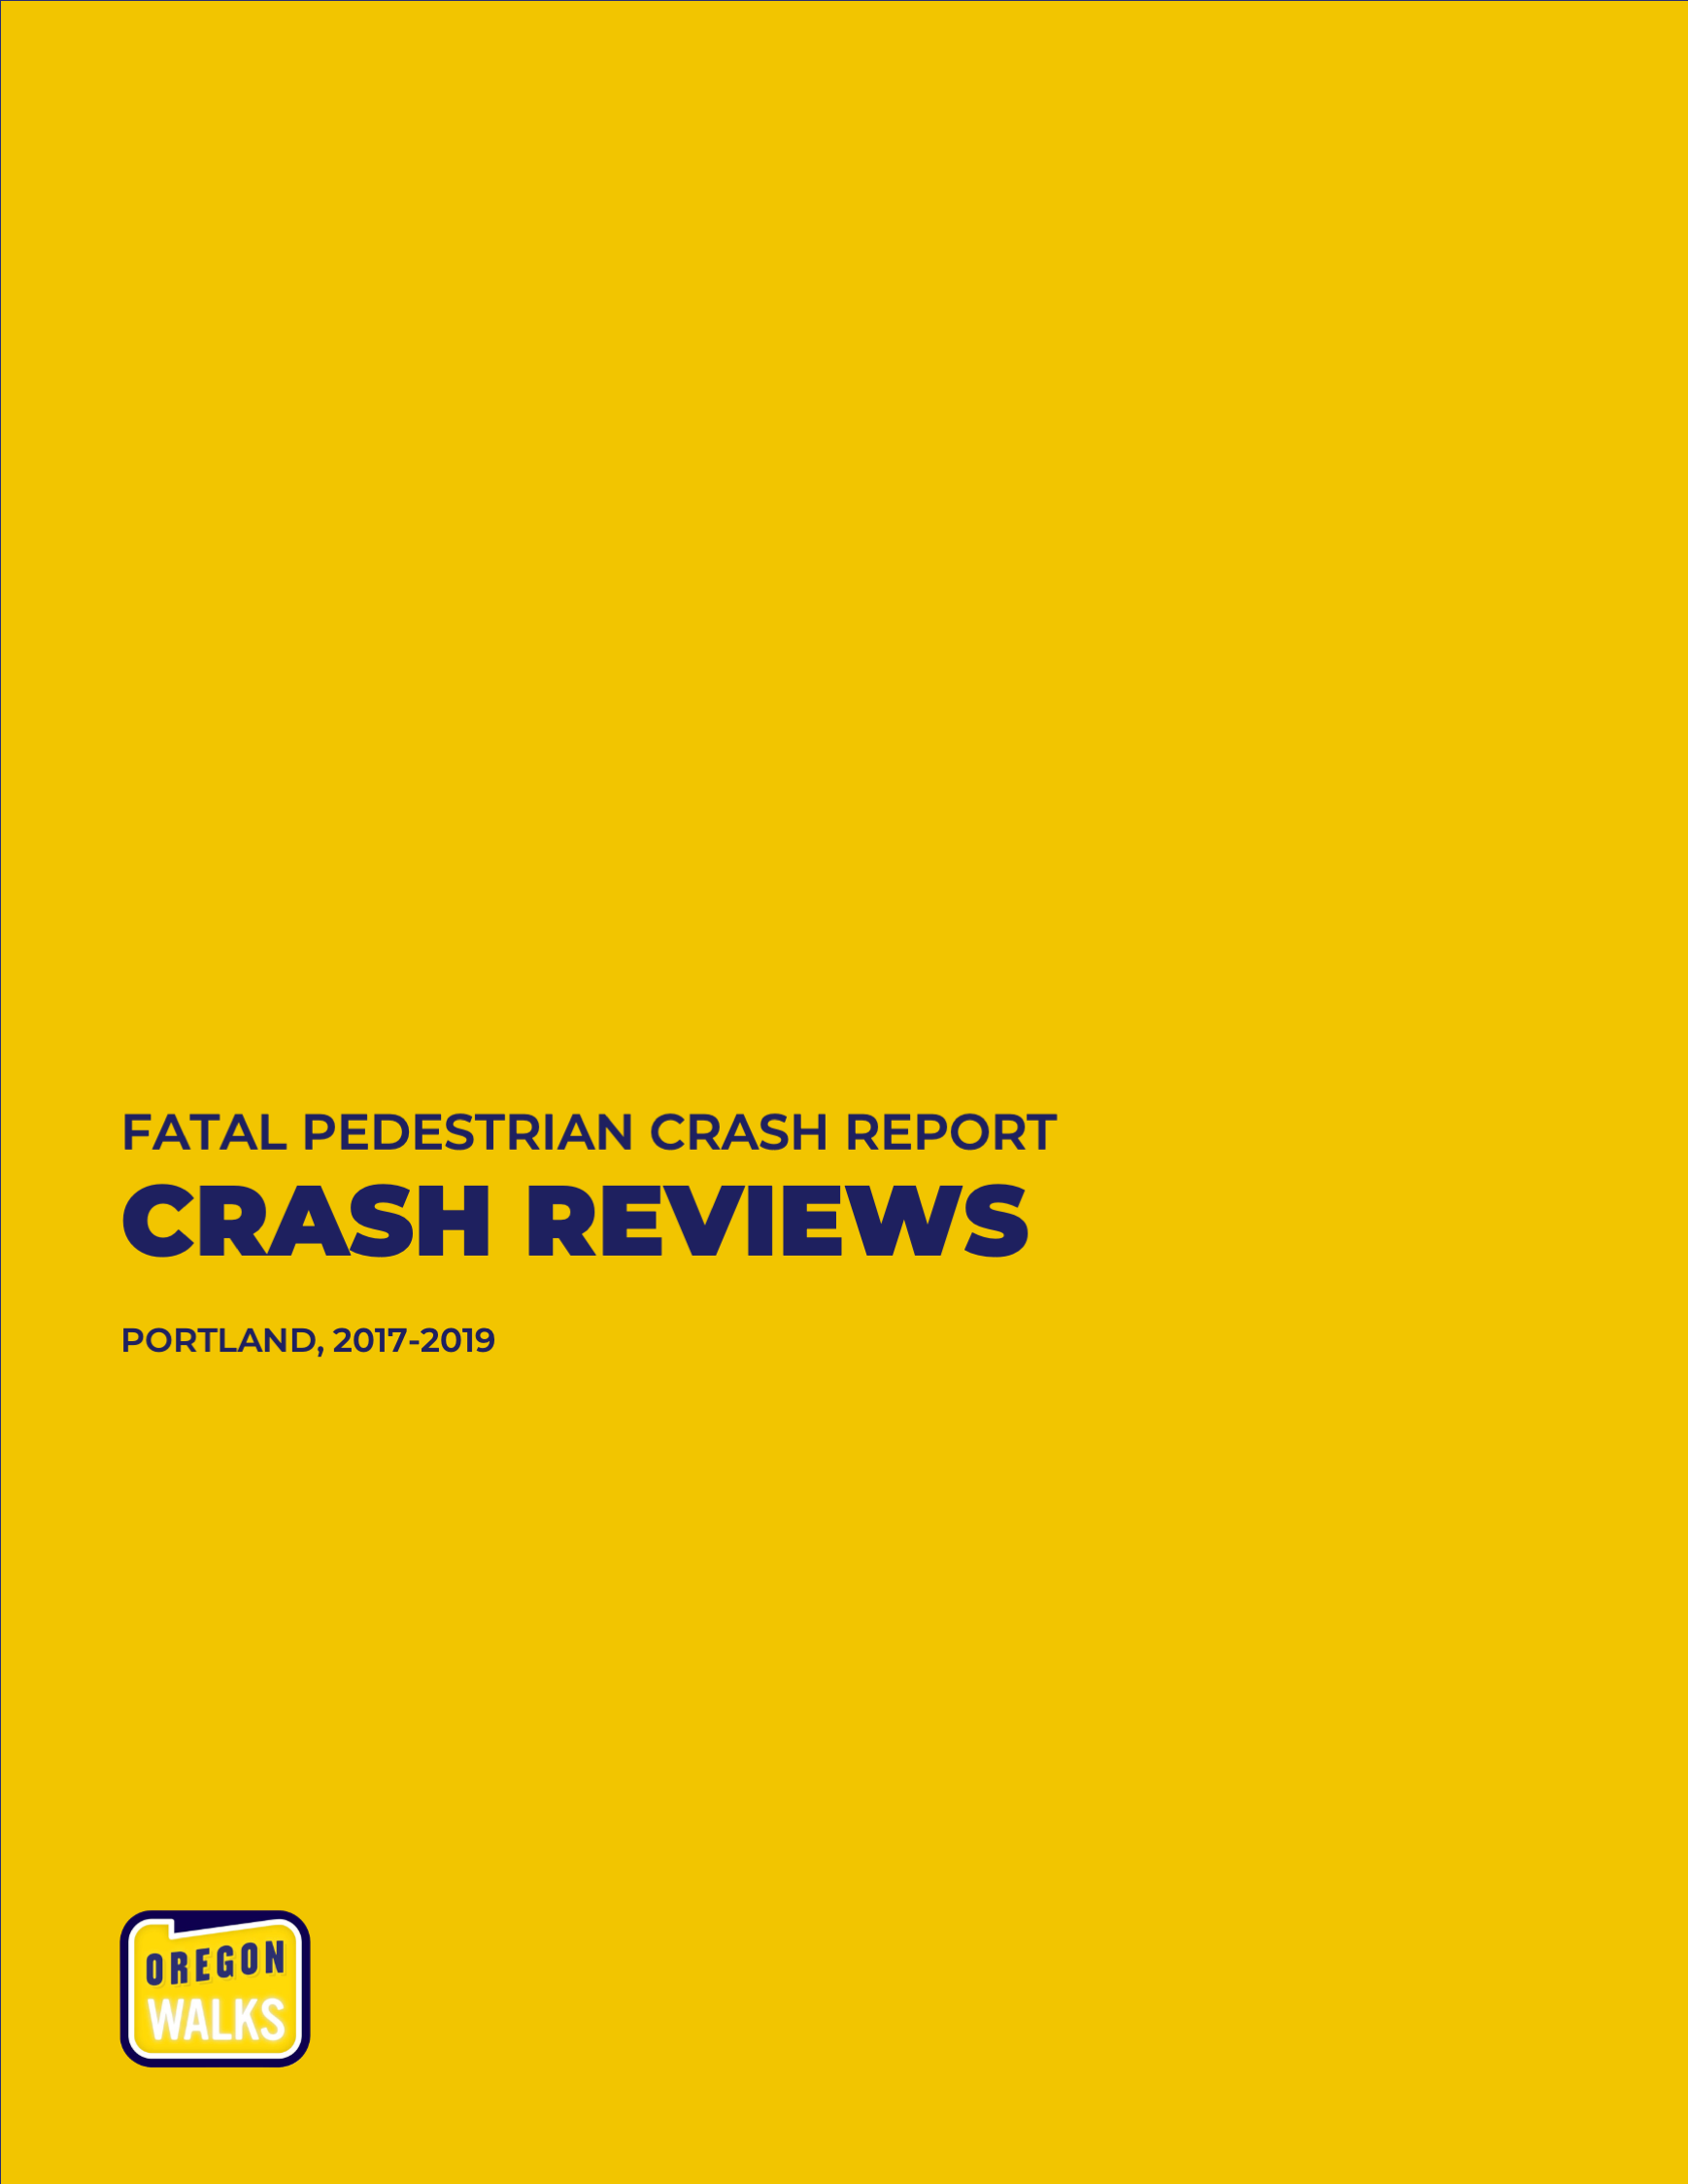 Crash Reviews Web Image UPDATED